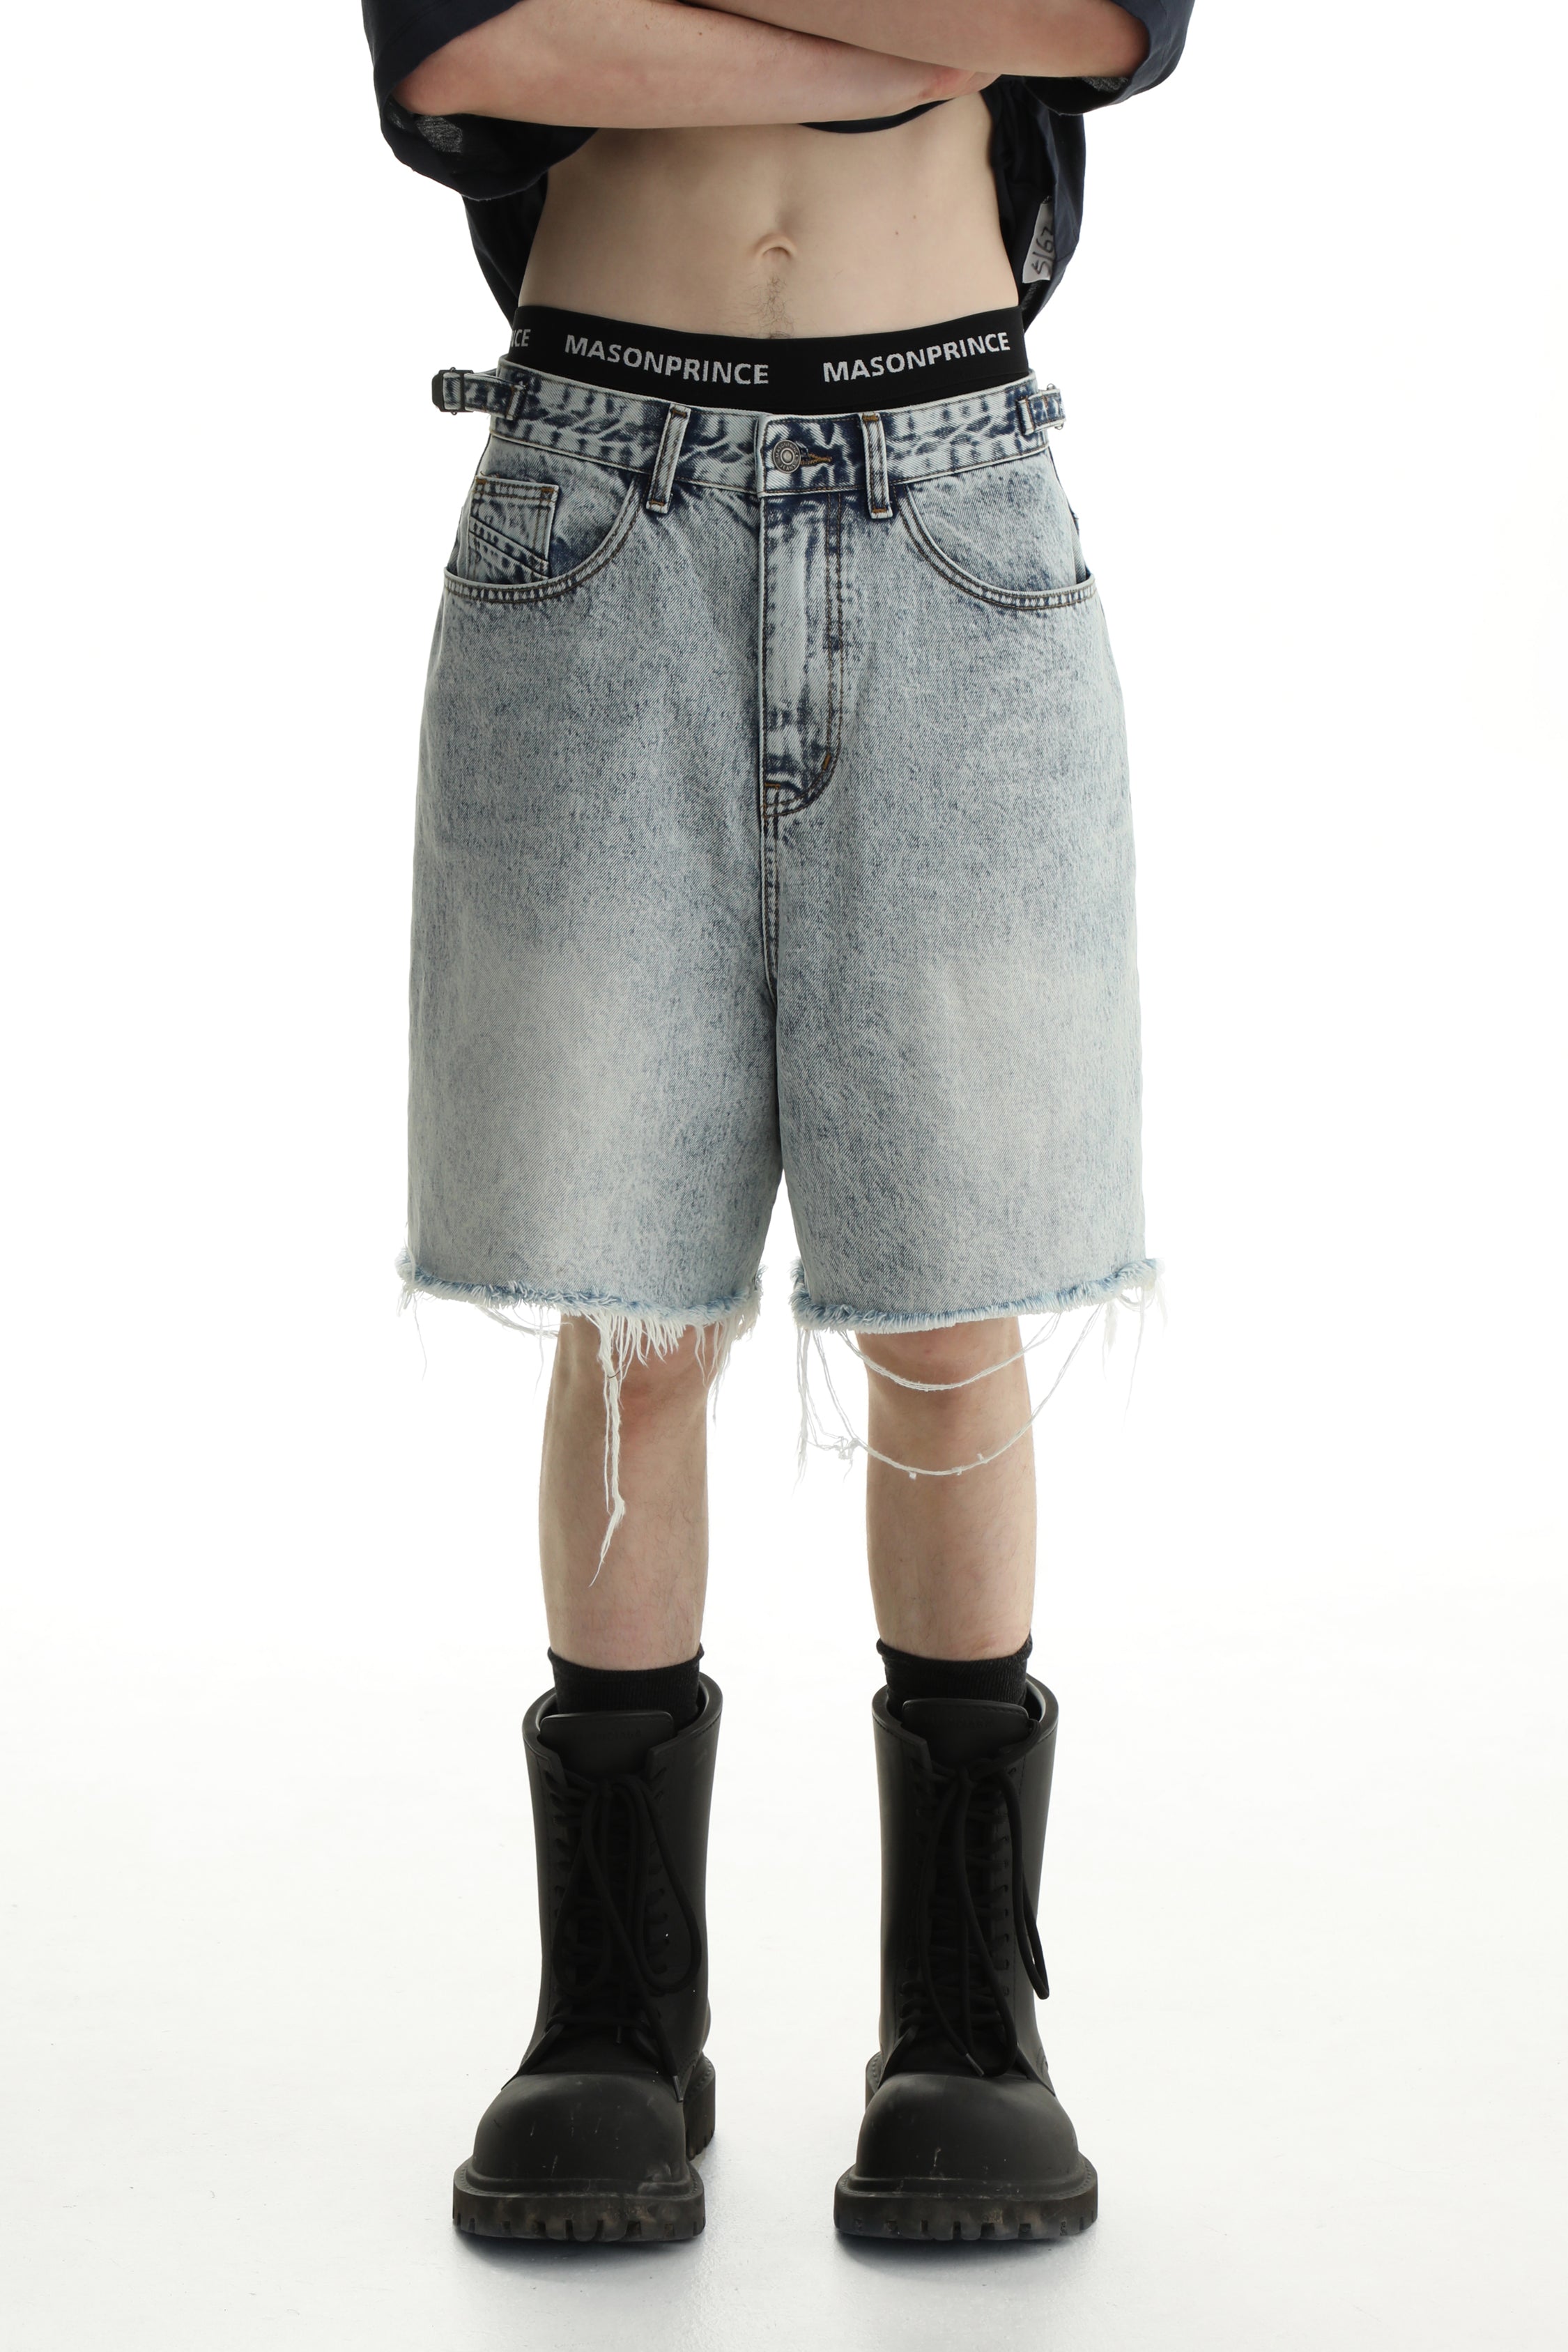 Denim Shorts & Jeans Set with Faded Raw Edges - chiclara